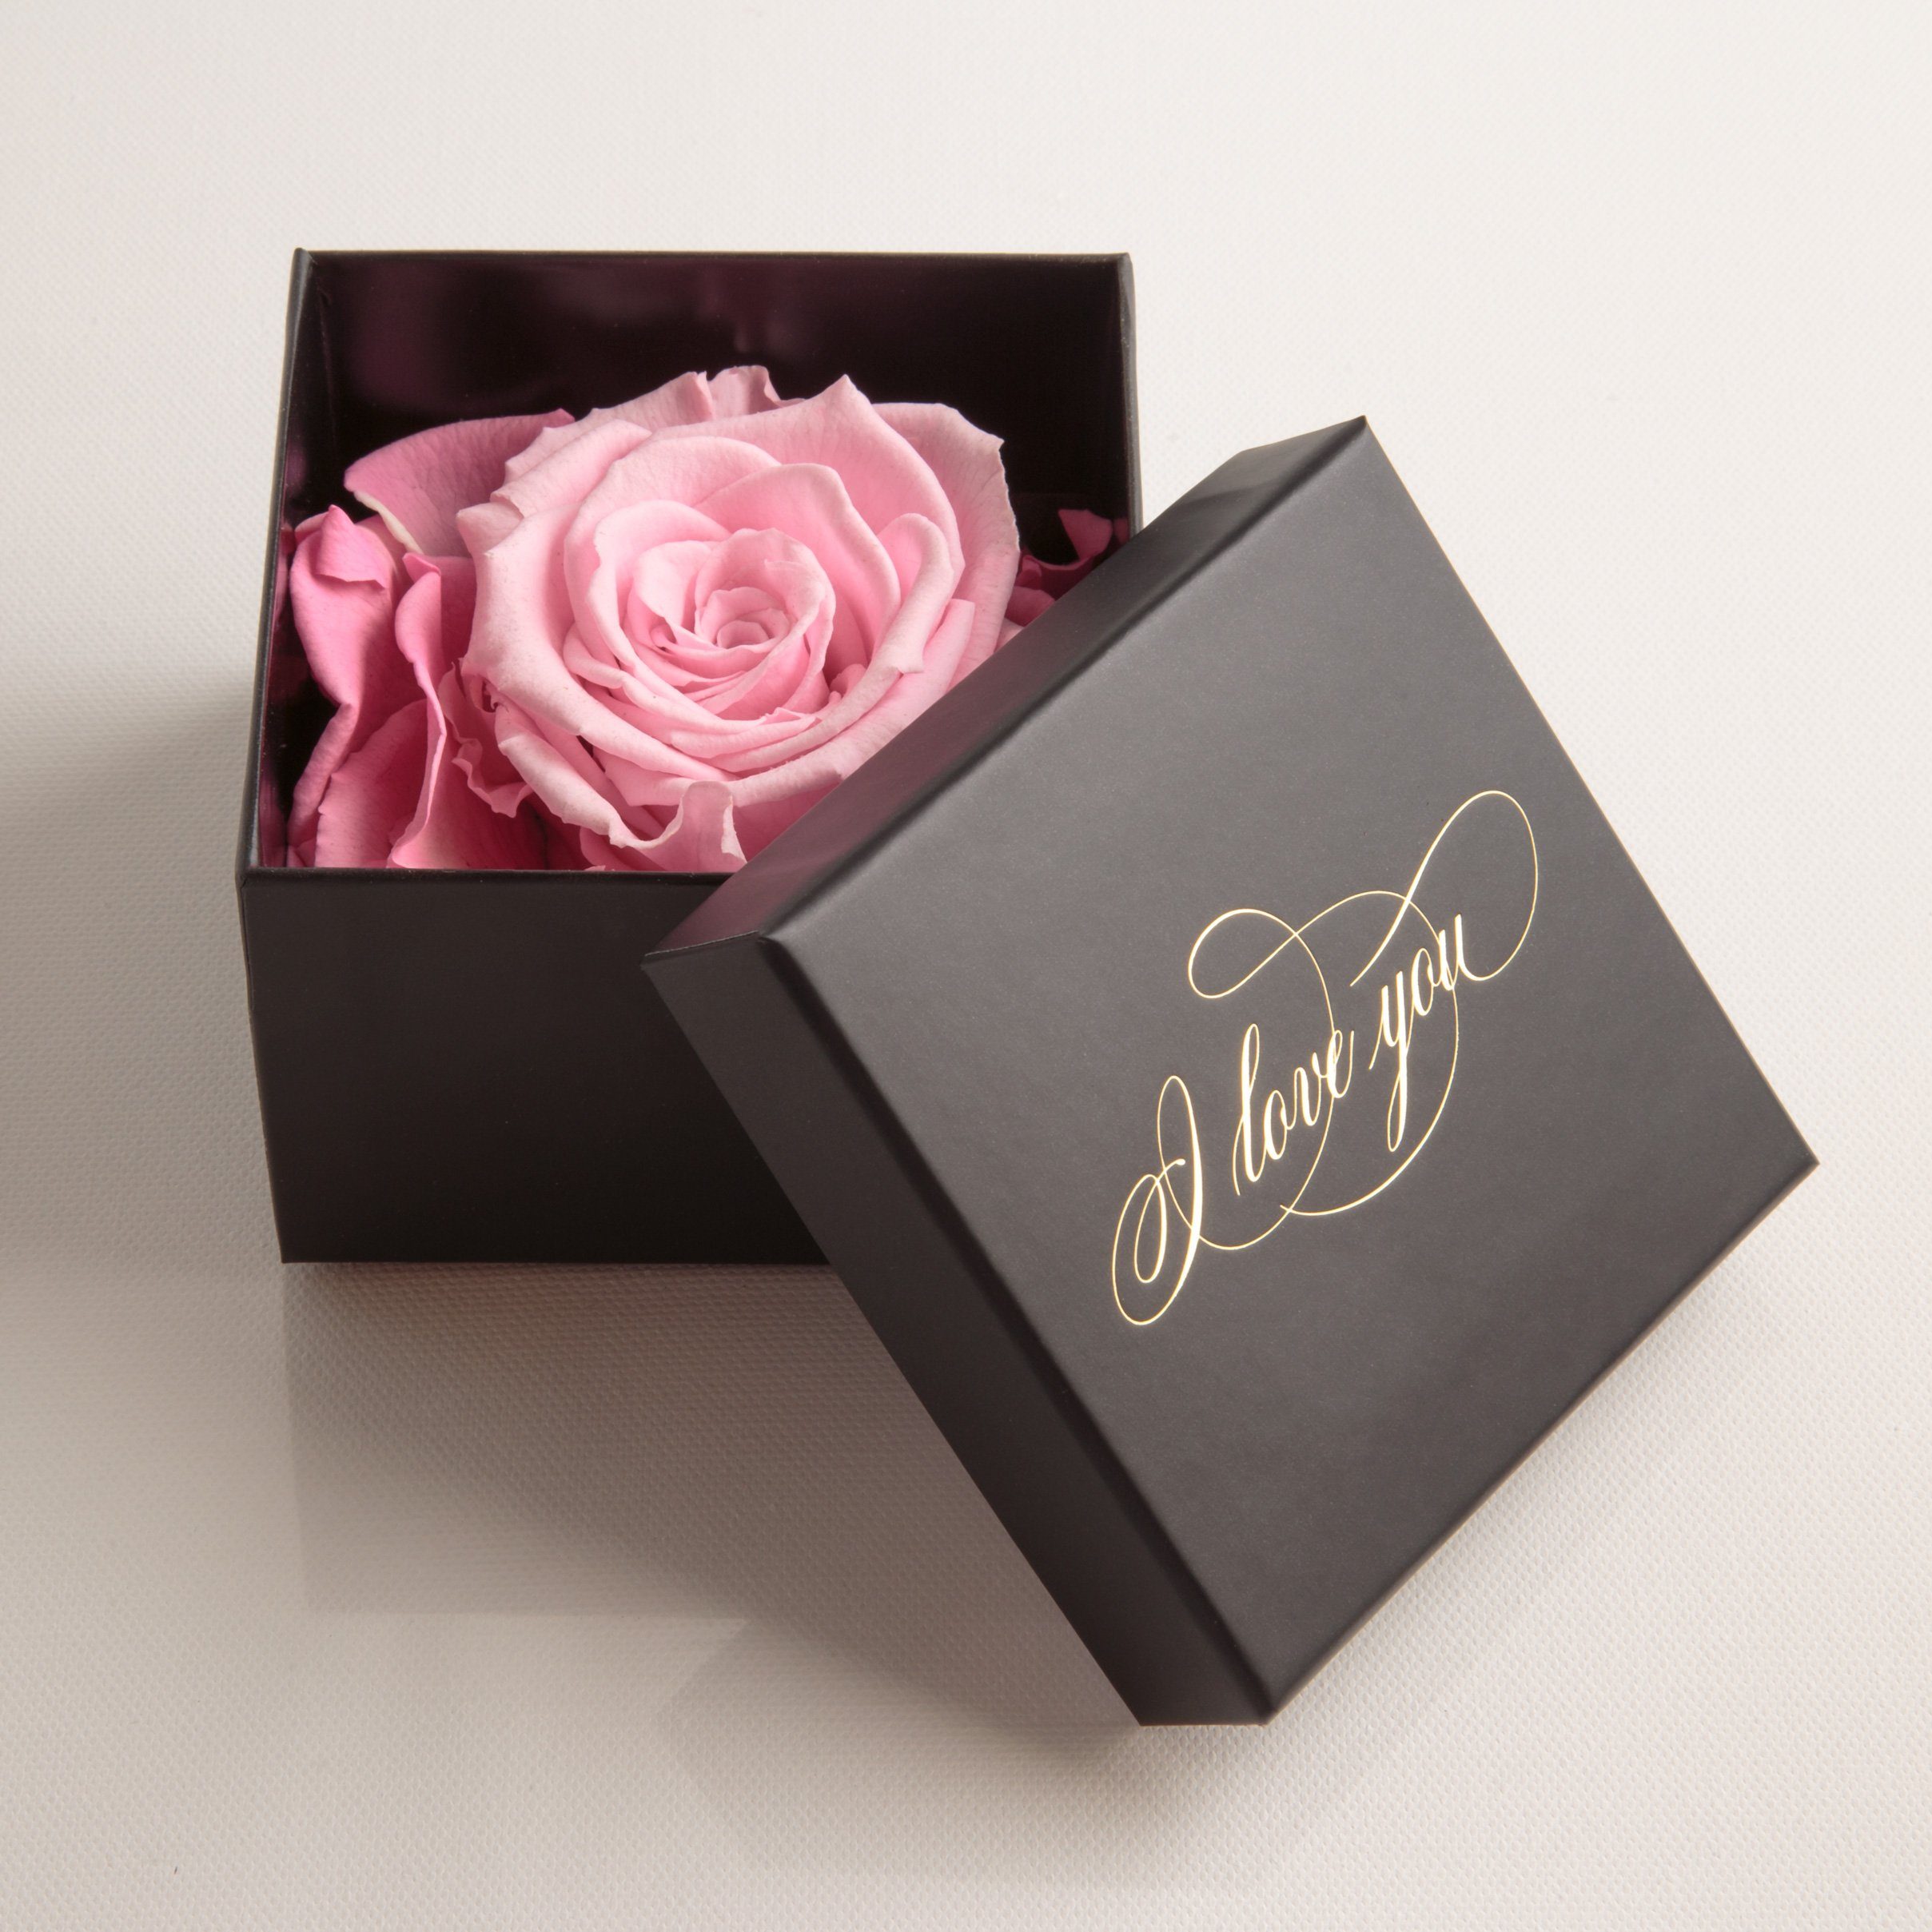 Kunstblume Infinity Rose Box I Höhe konserviert Love You Rose, Rose Heidelberg, Rosa 6 cm, SCHULZ Echte ROSEMARIE Liebesbeweis Idee Geschenk